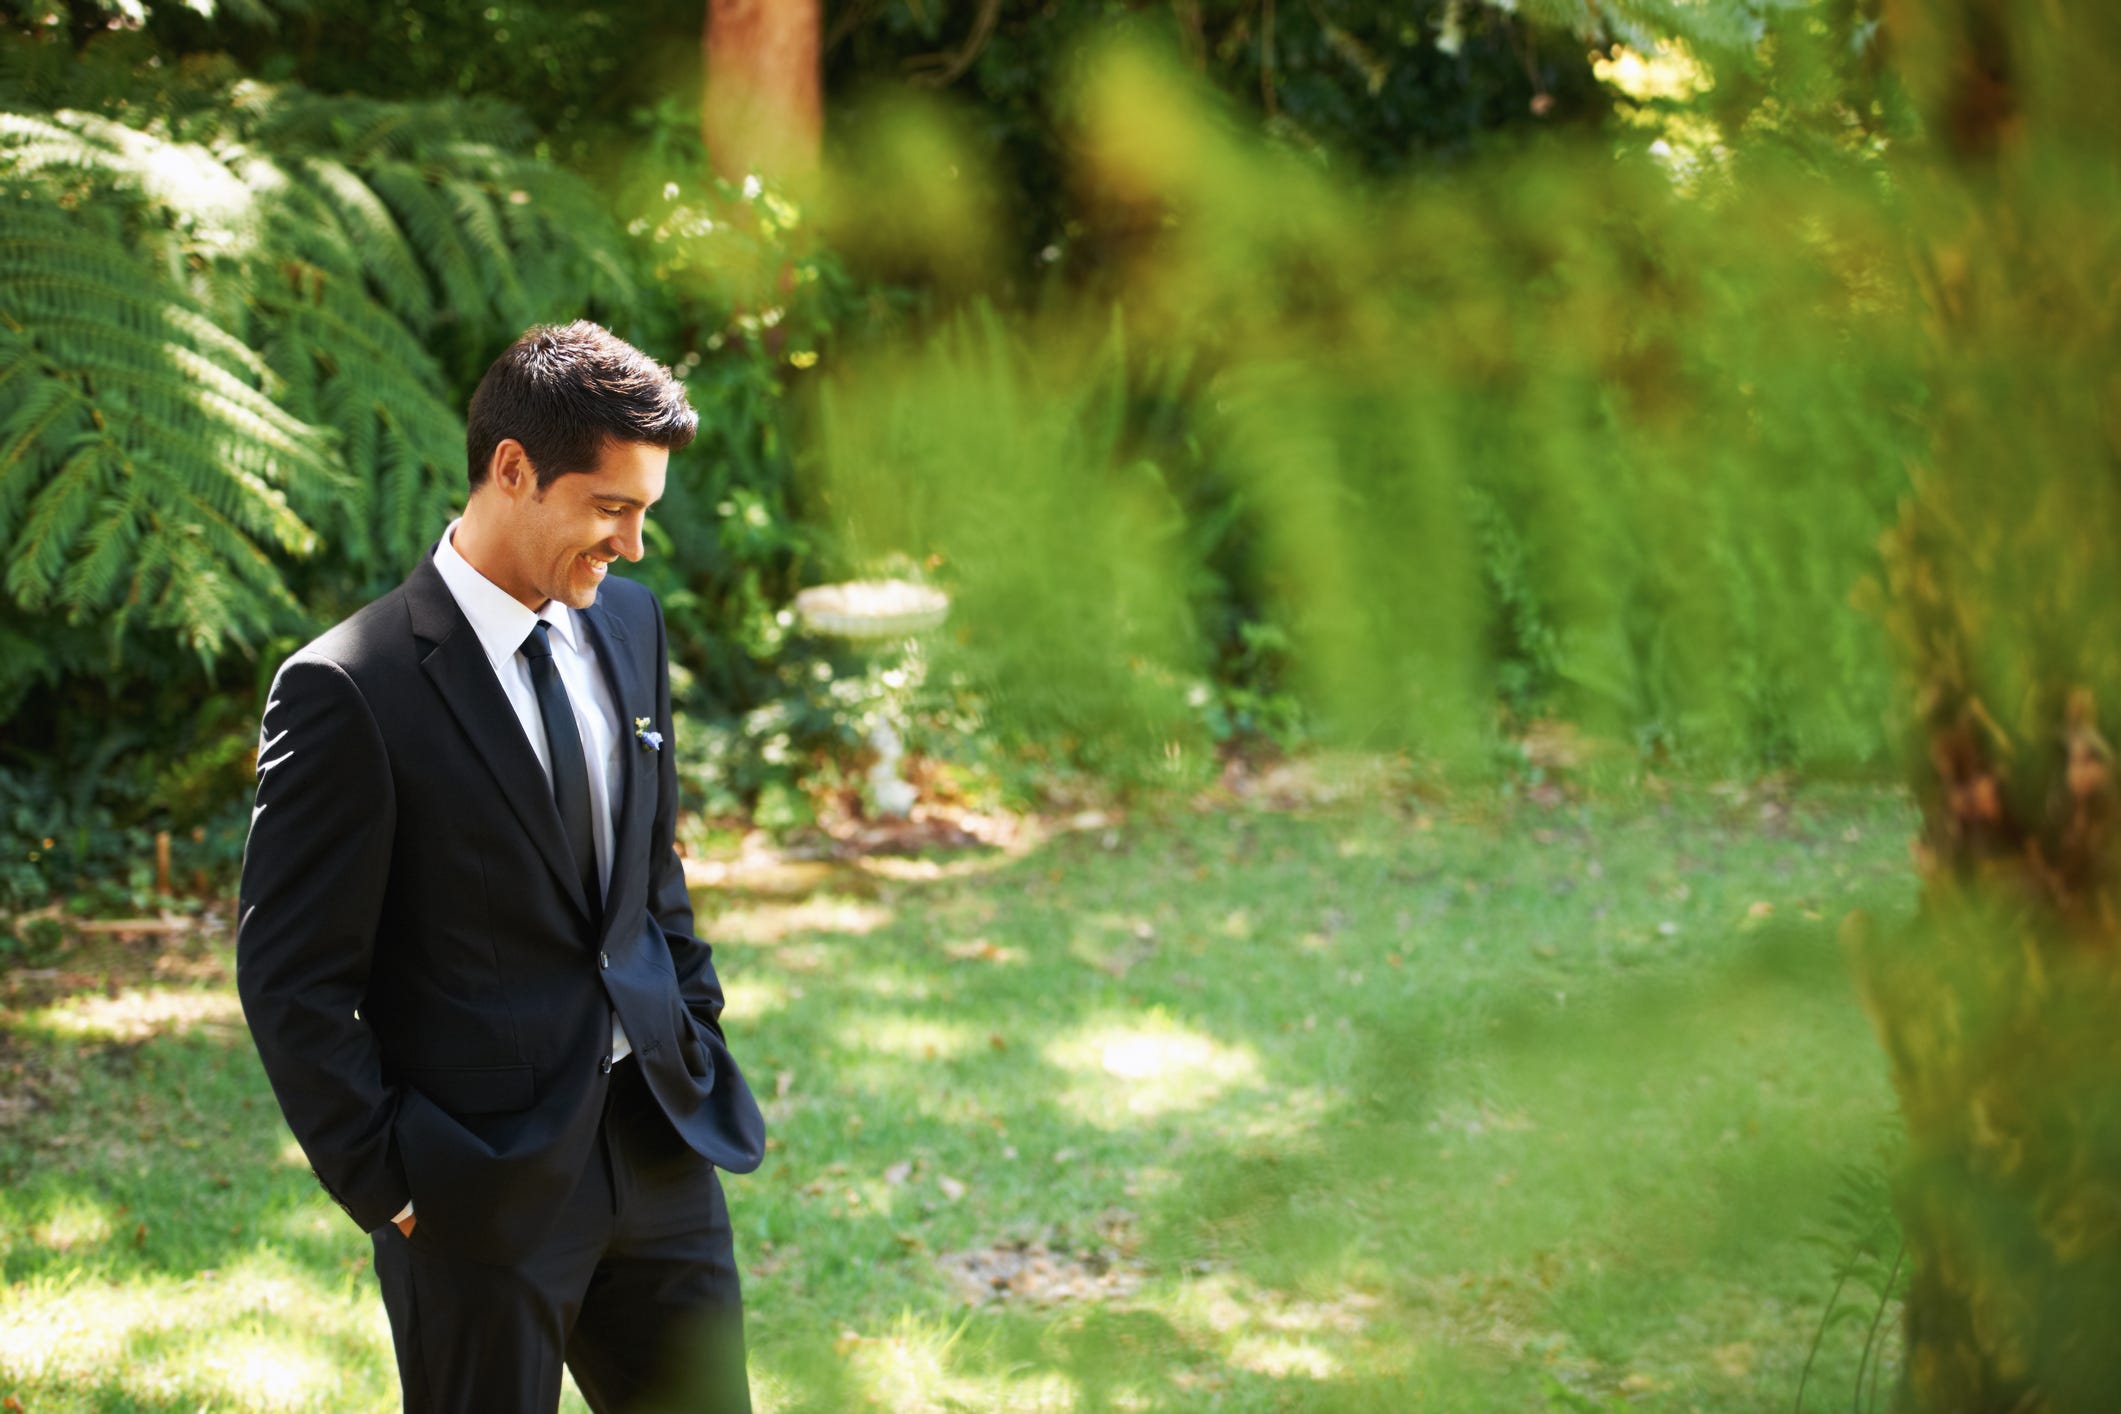 Wedding Attire for Men - What to Wear to a Summer Wedding